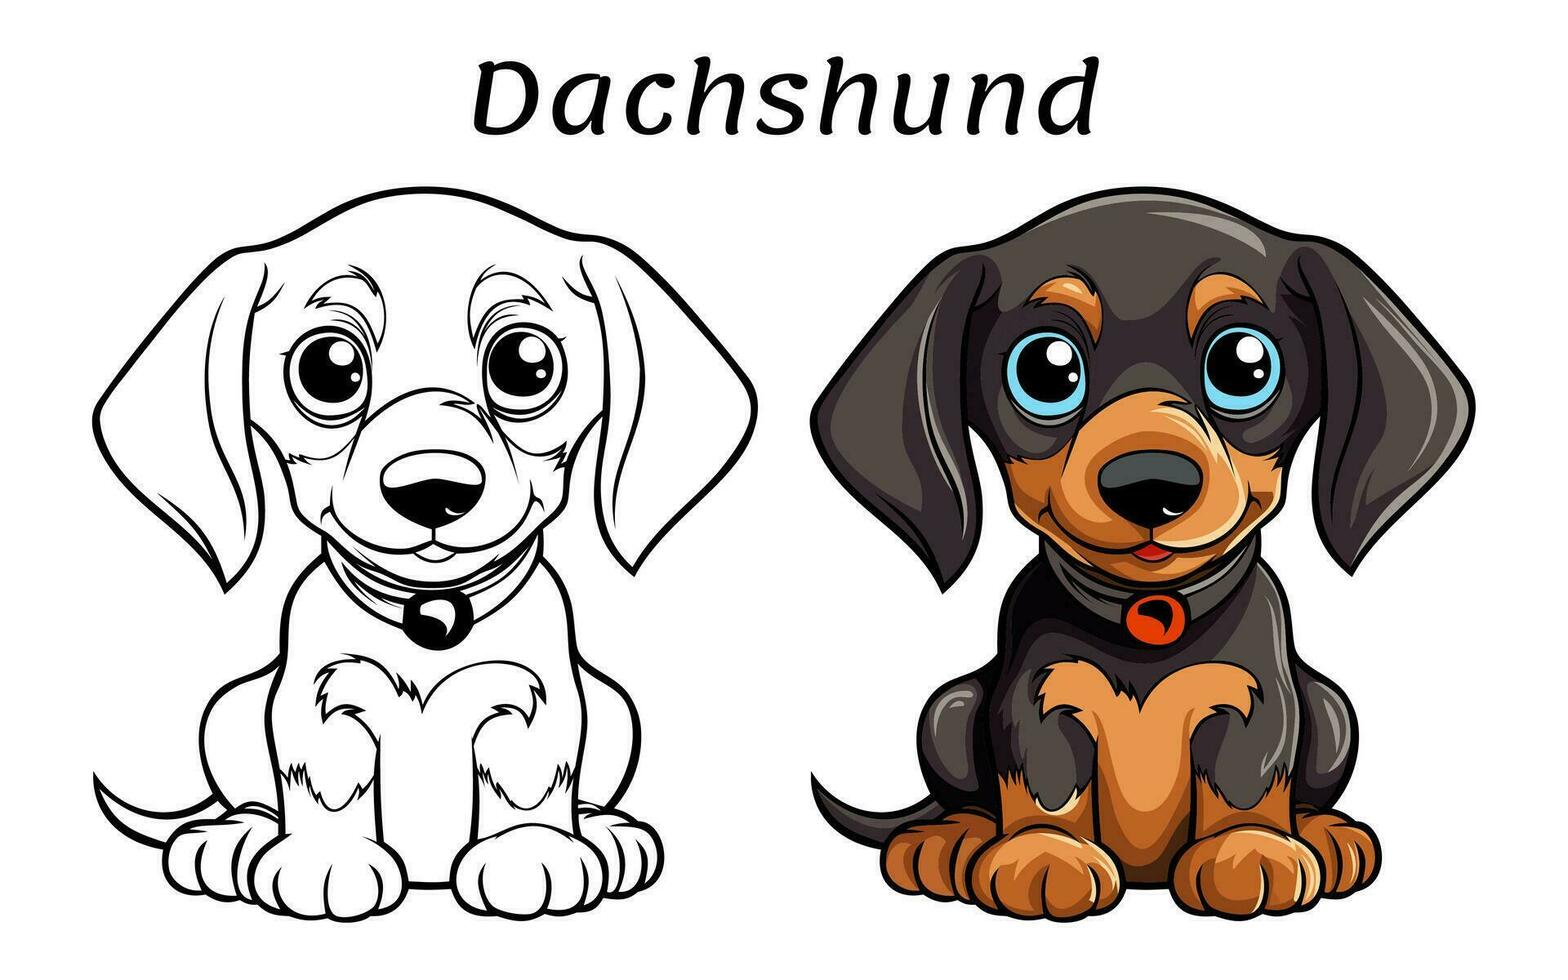 Cute Dachshund Dog Animal Coloring Book Illustration vector